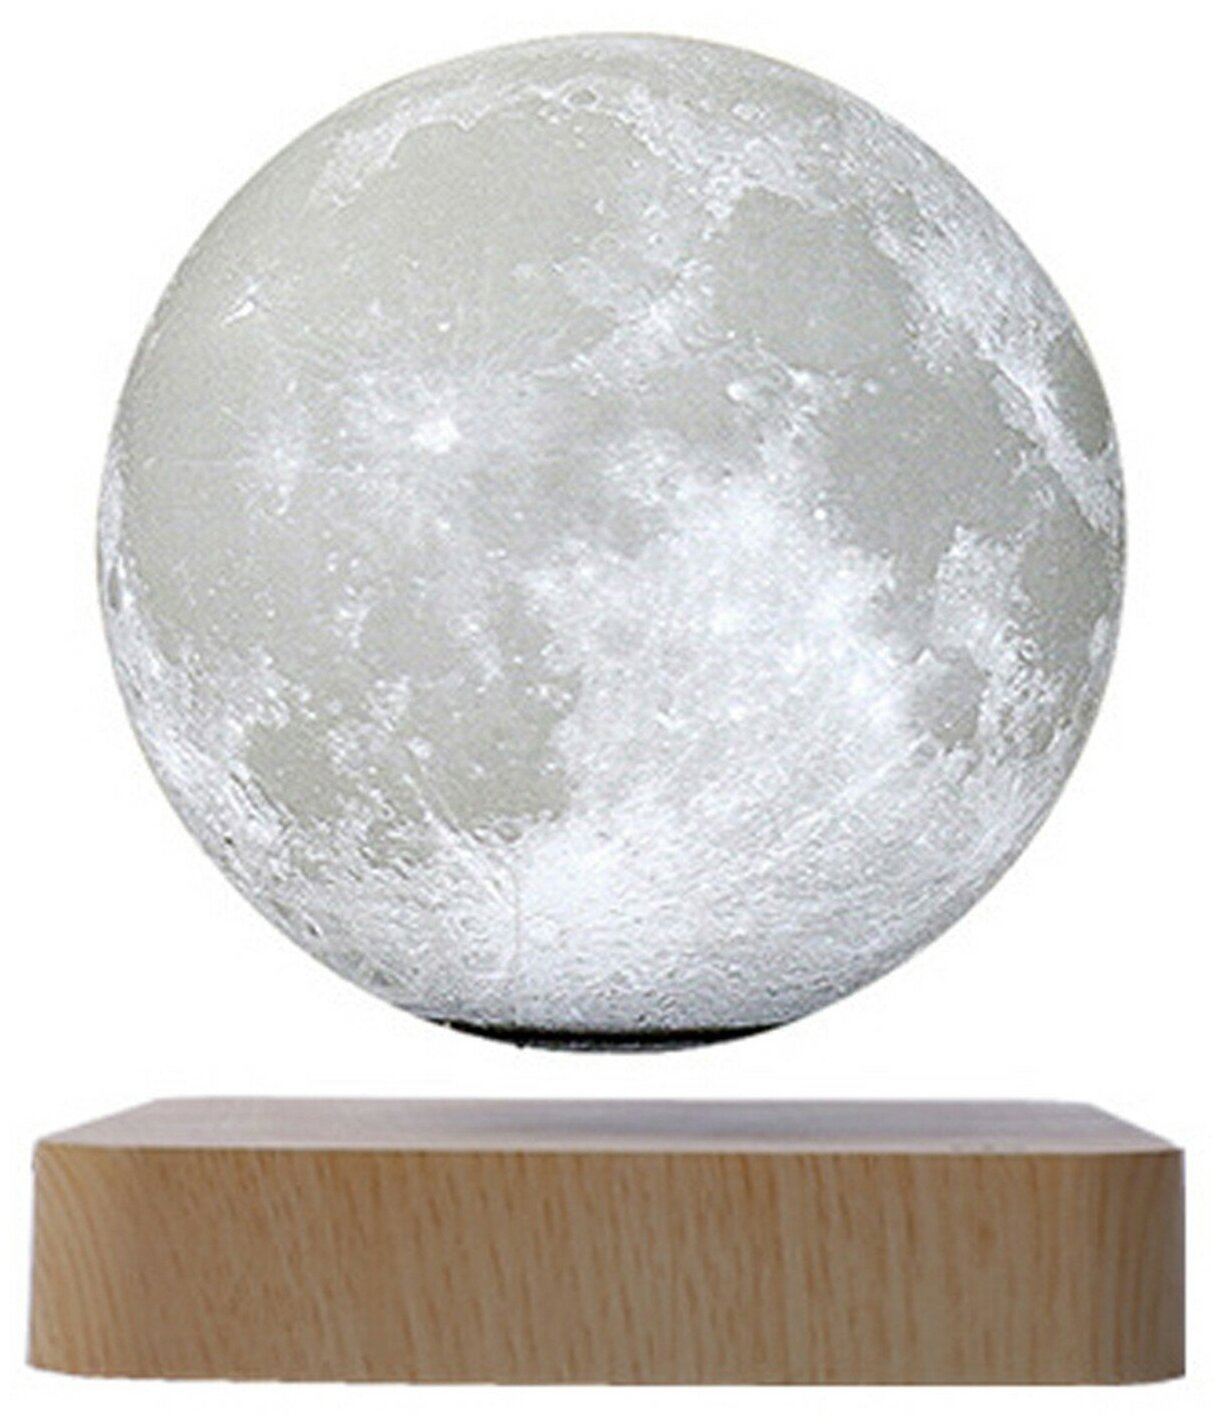 Левитирующая Луна 14 см на подставке светлое дерево